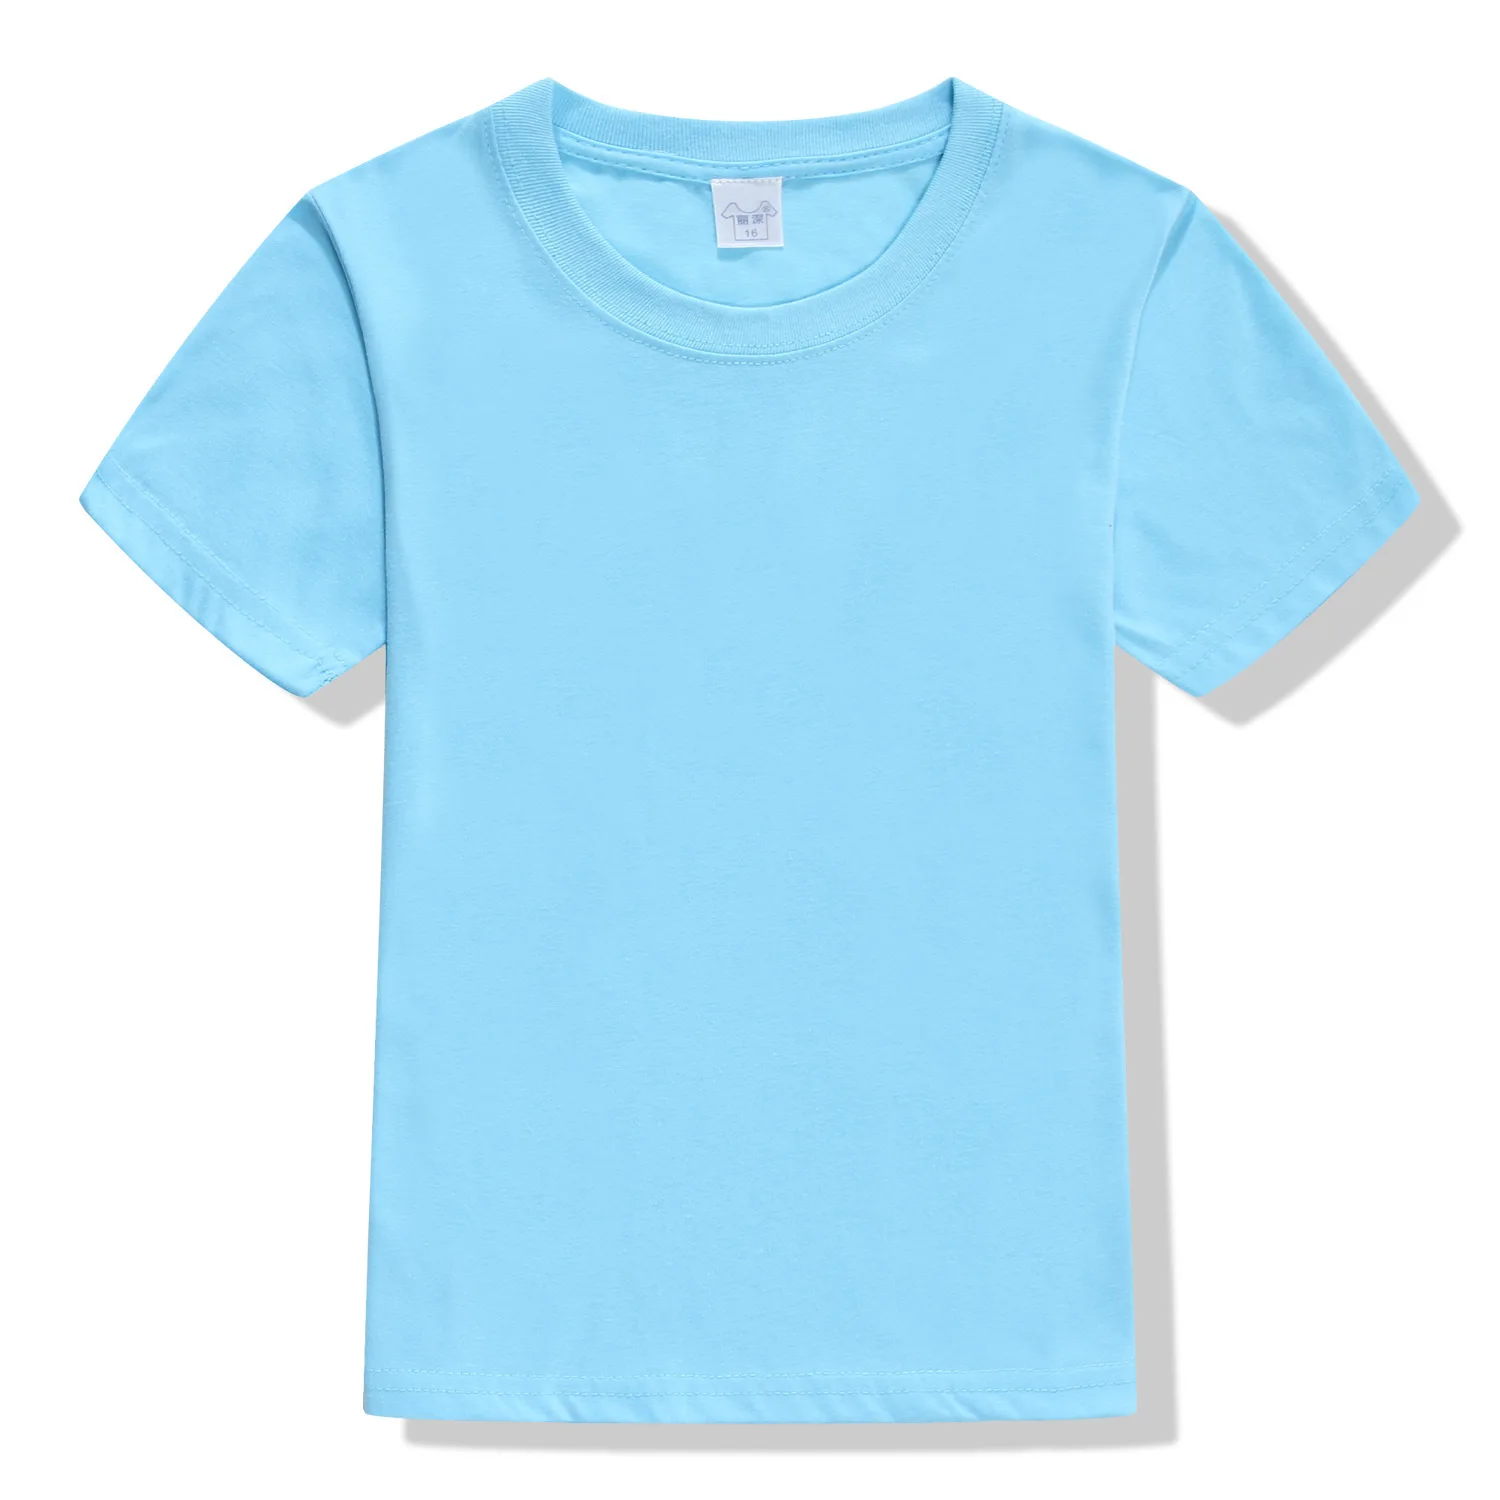 Bulk Blank Kids Boys T Shirt Design Cotton Wholesale China - Buy T ...